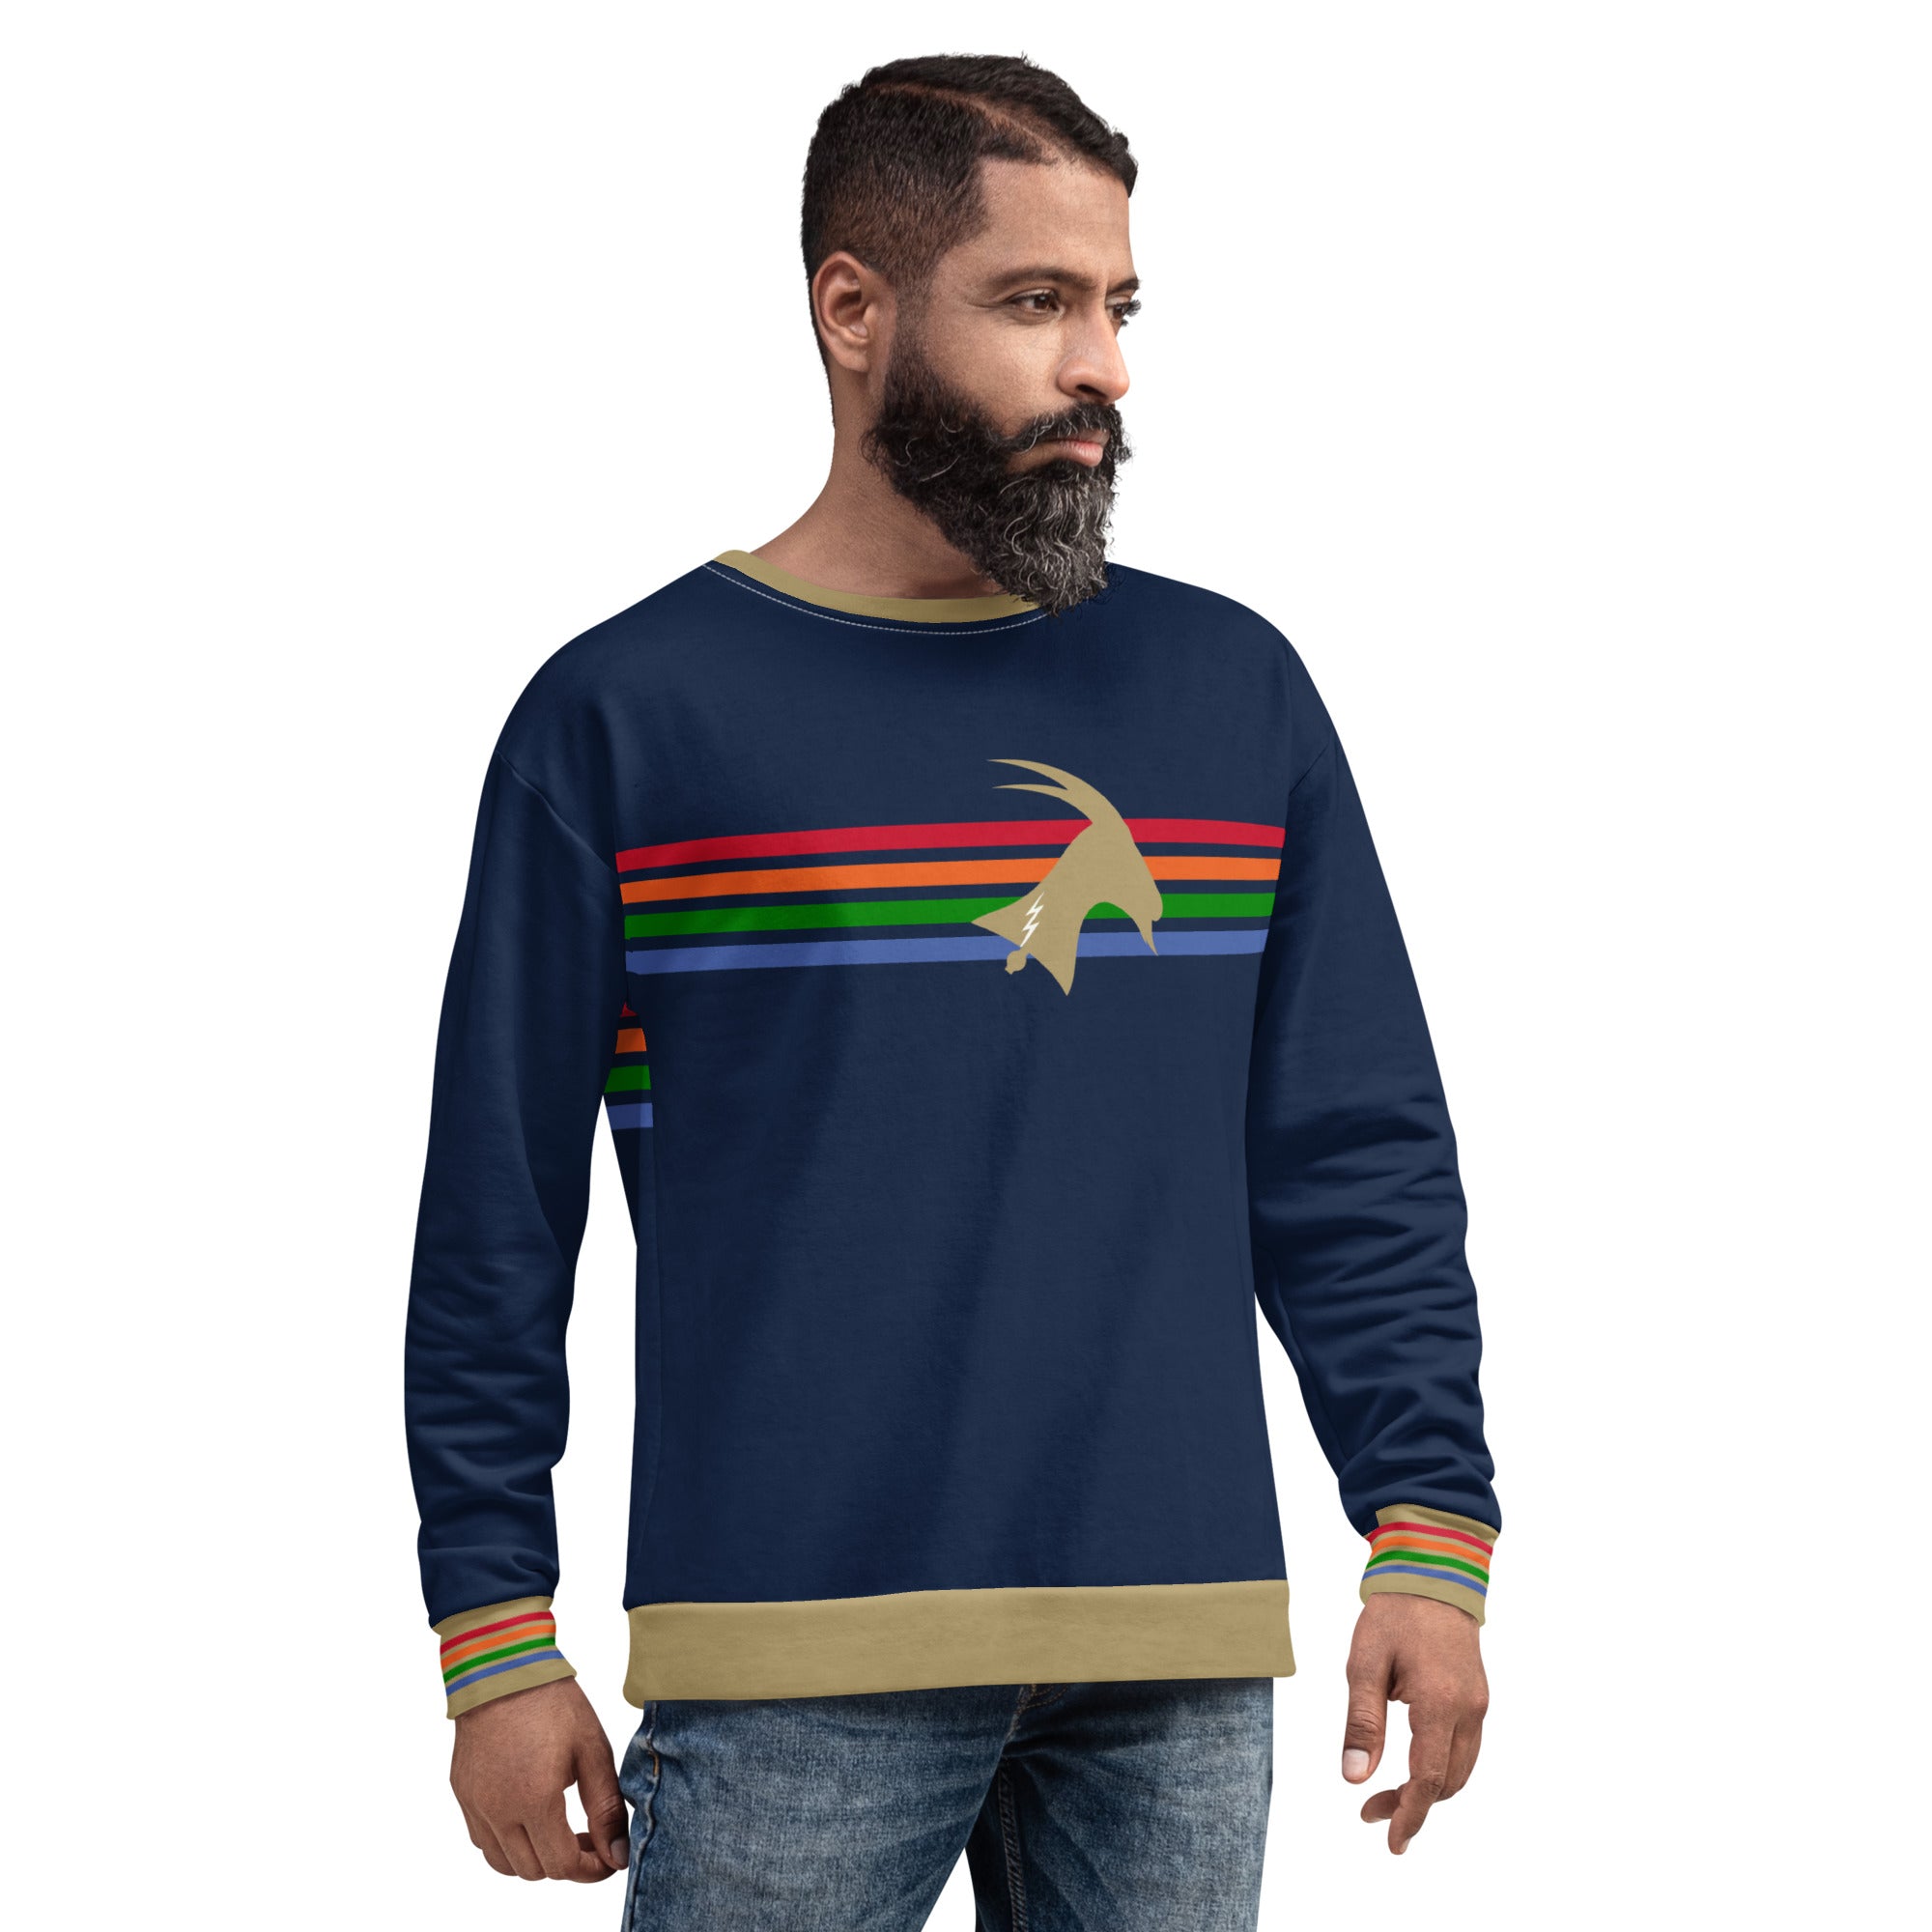 "Phillygoat Spectrum Vibes" All-Over Sweatshirt